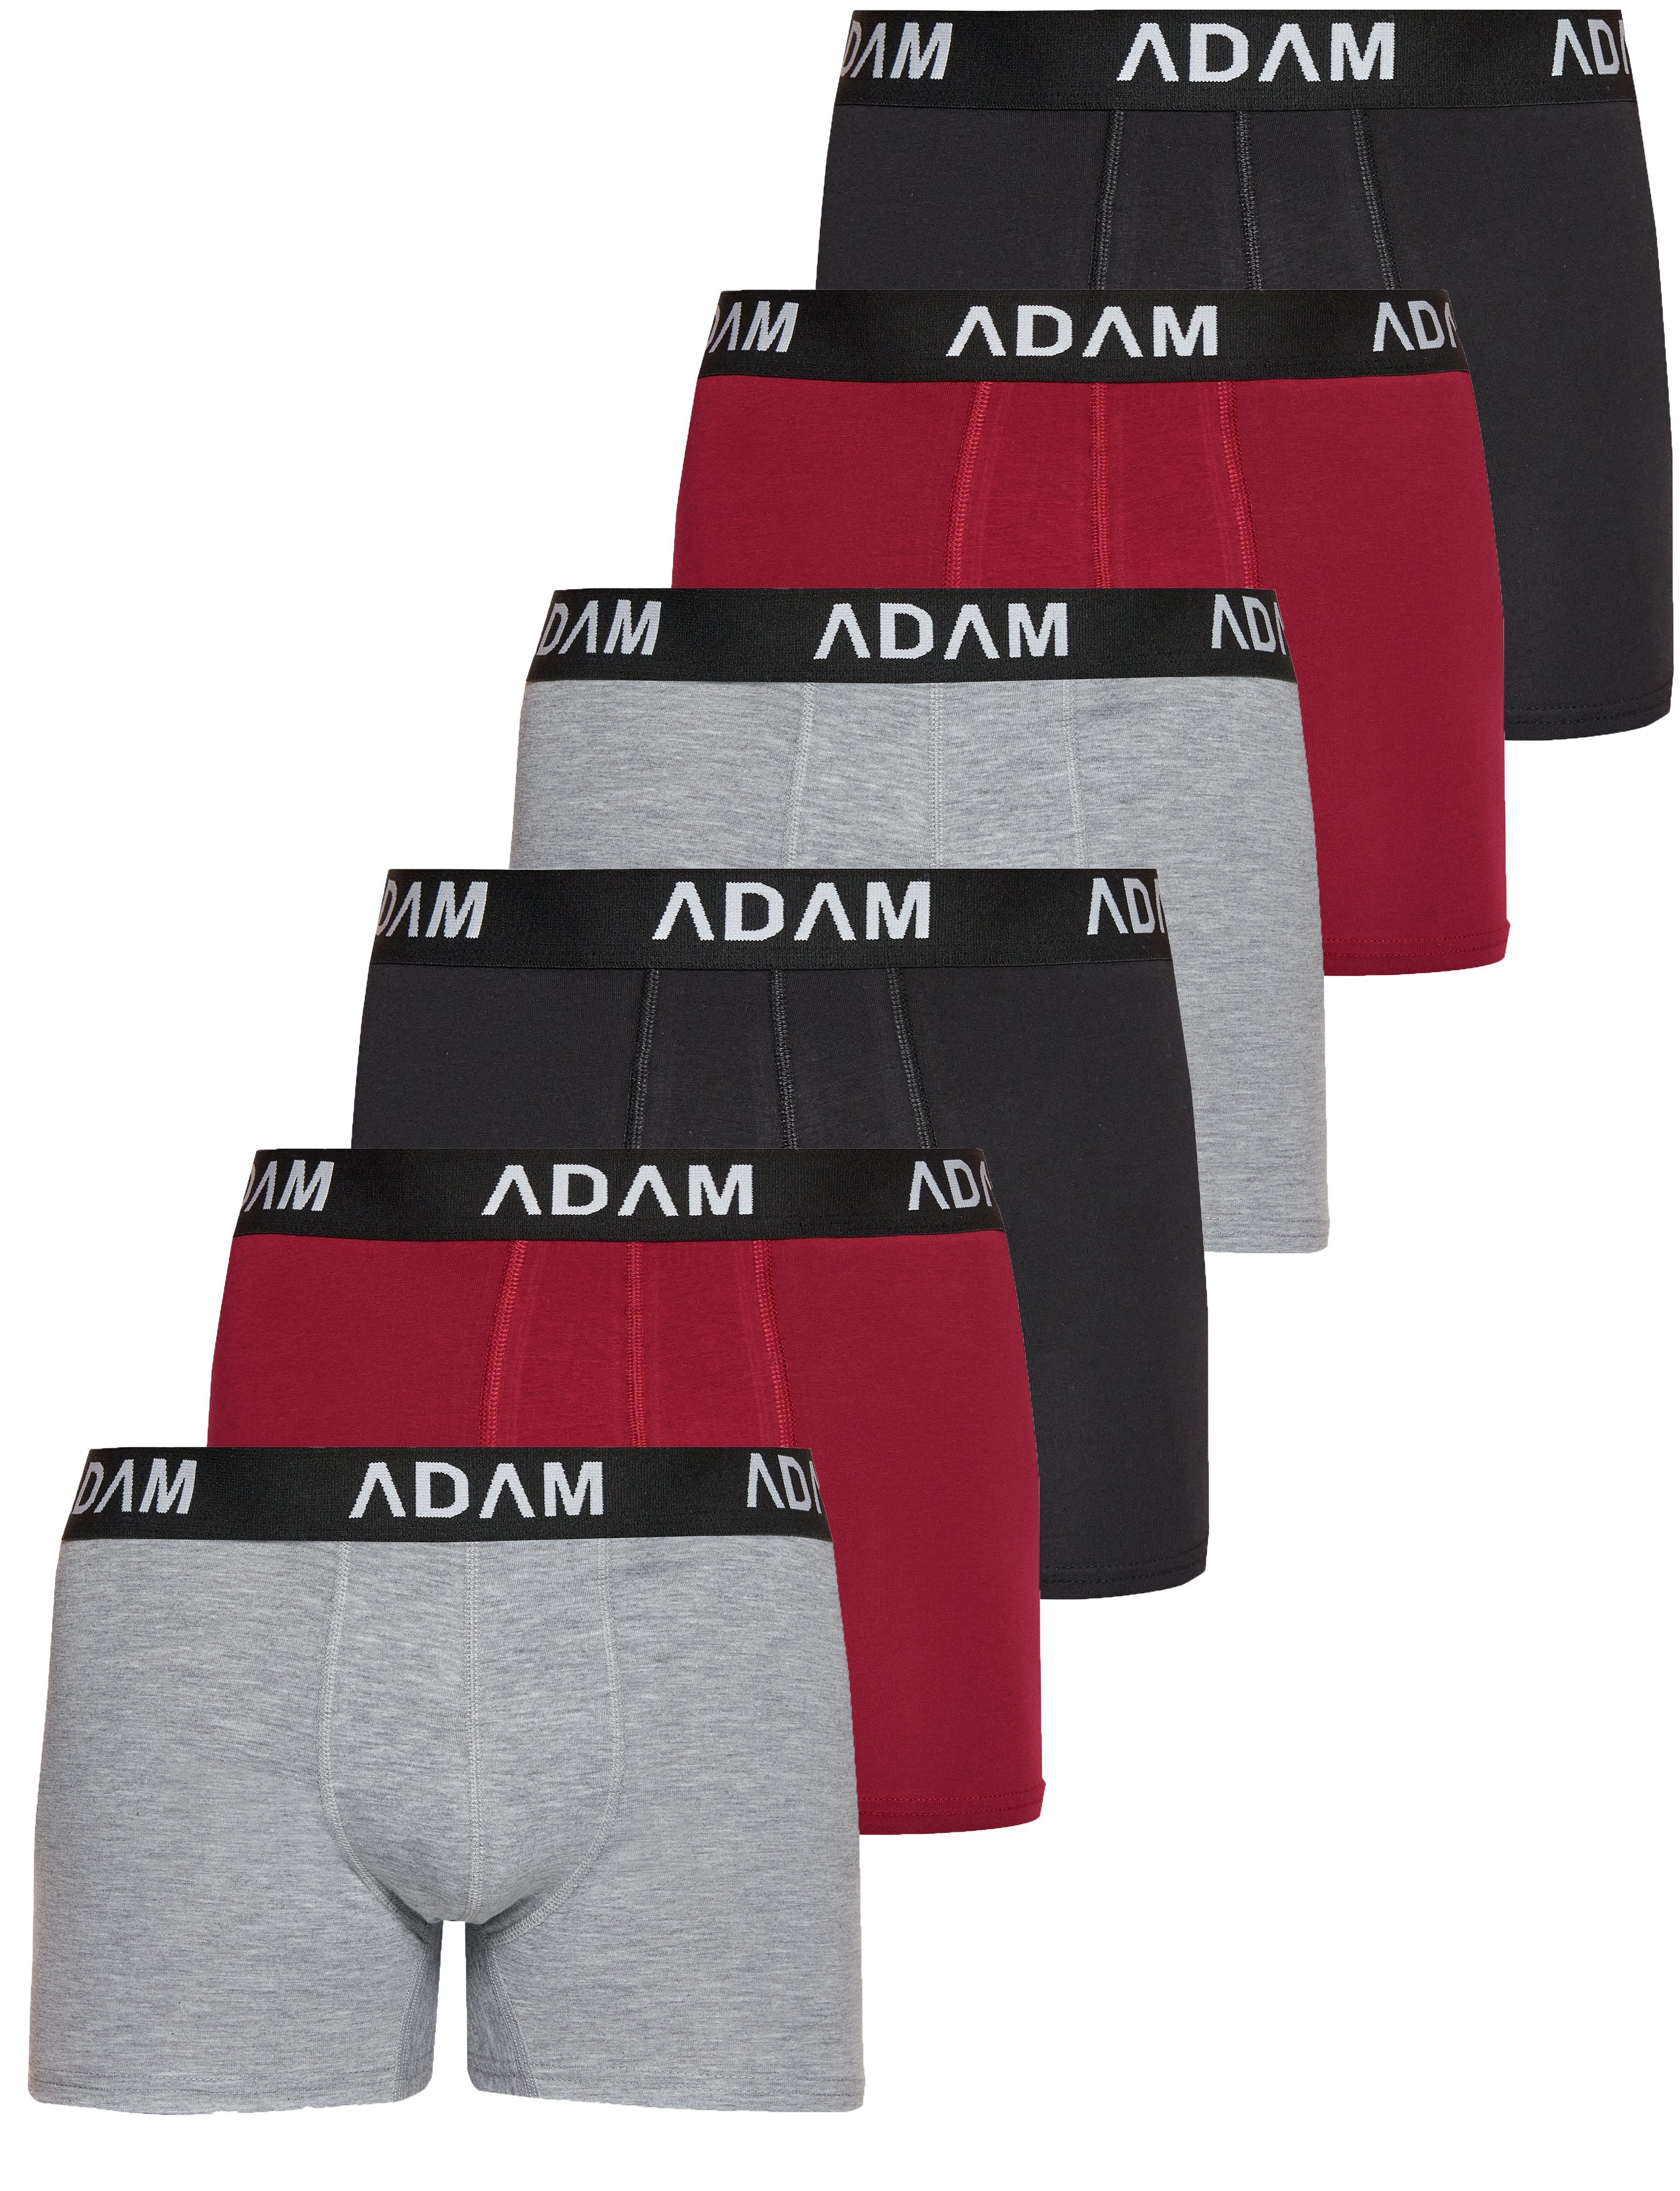 ADAM JEANS Boxershorts Boxer-1 (6-St., 6er Set, 8er Set, 10er Set, 12er Set) Boxershorts Herren Boxer Shorts Männer Unterhosen Trunks Underwear 6er Set Box-F